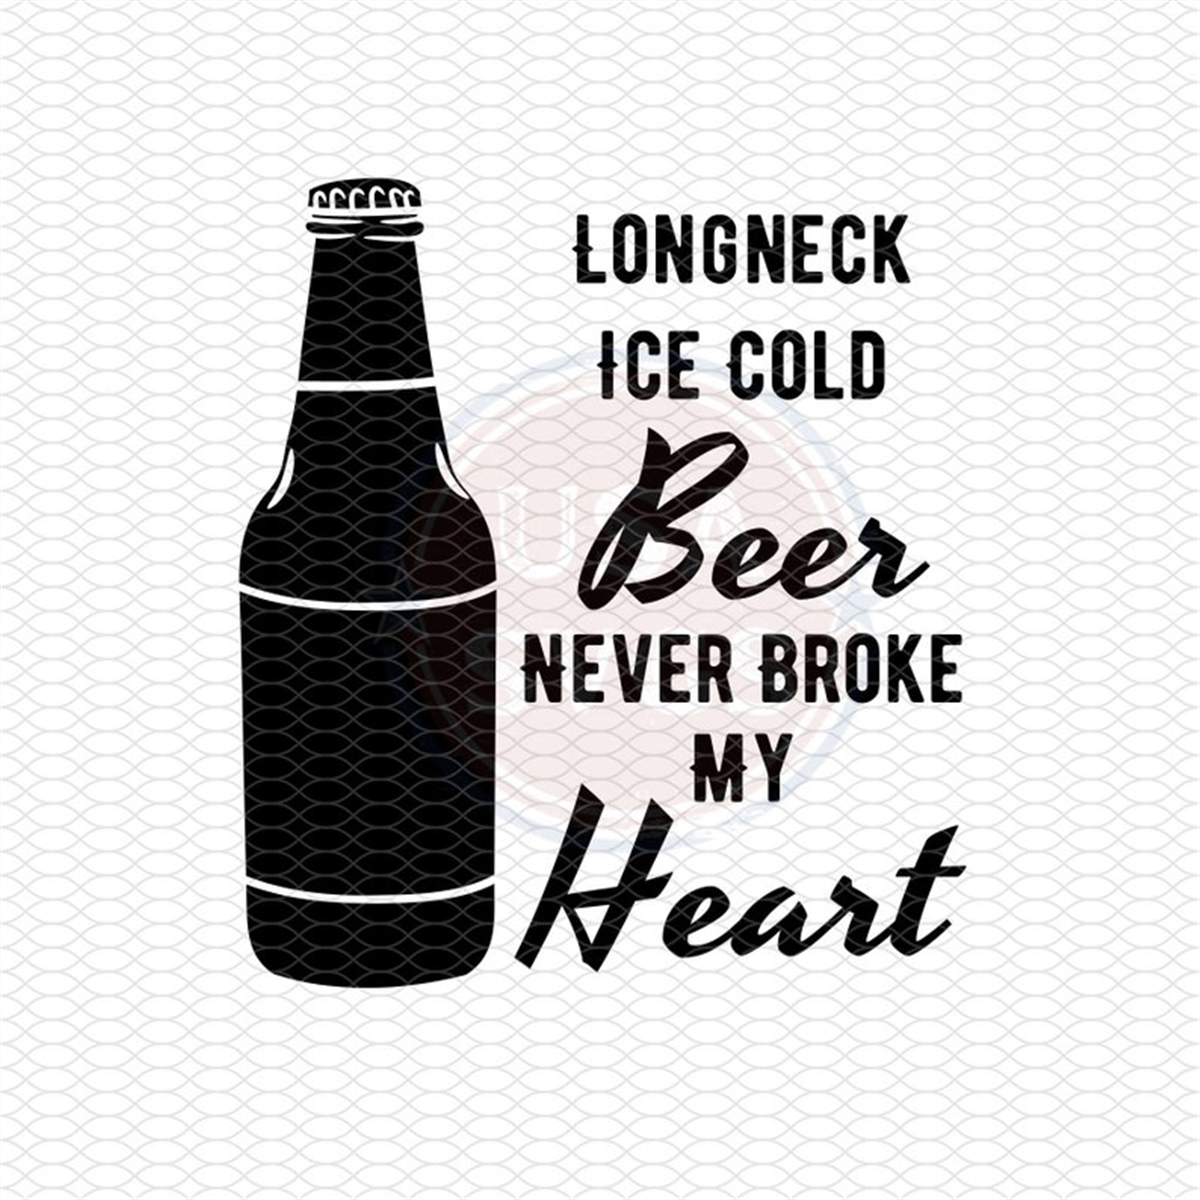 long-neck-ice-cold-beer-never-broke-my-heart-svg-png-jpg-image-1